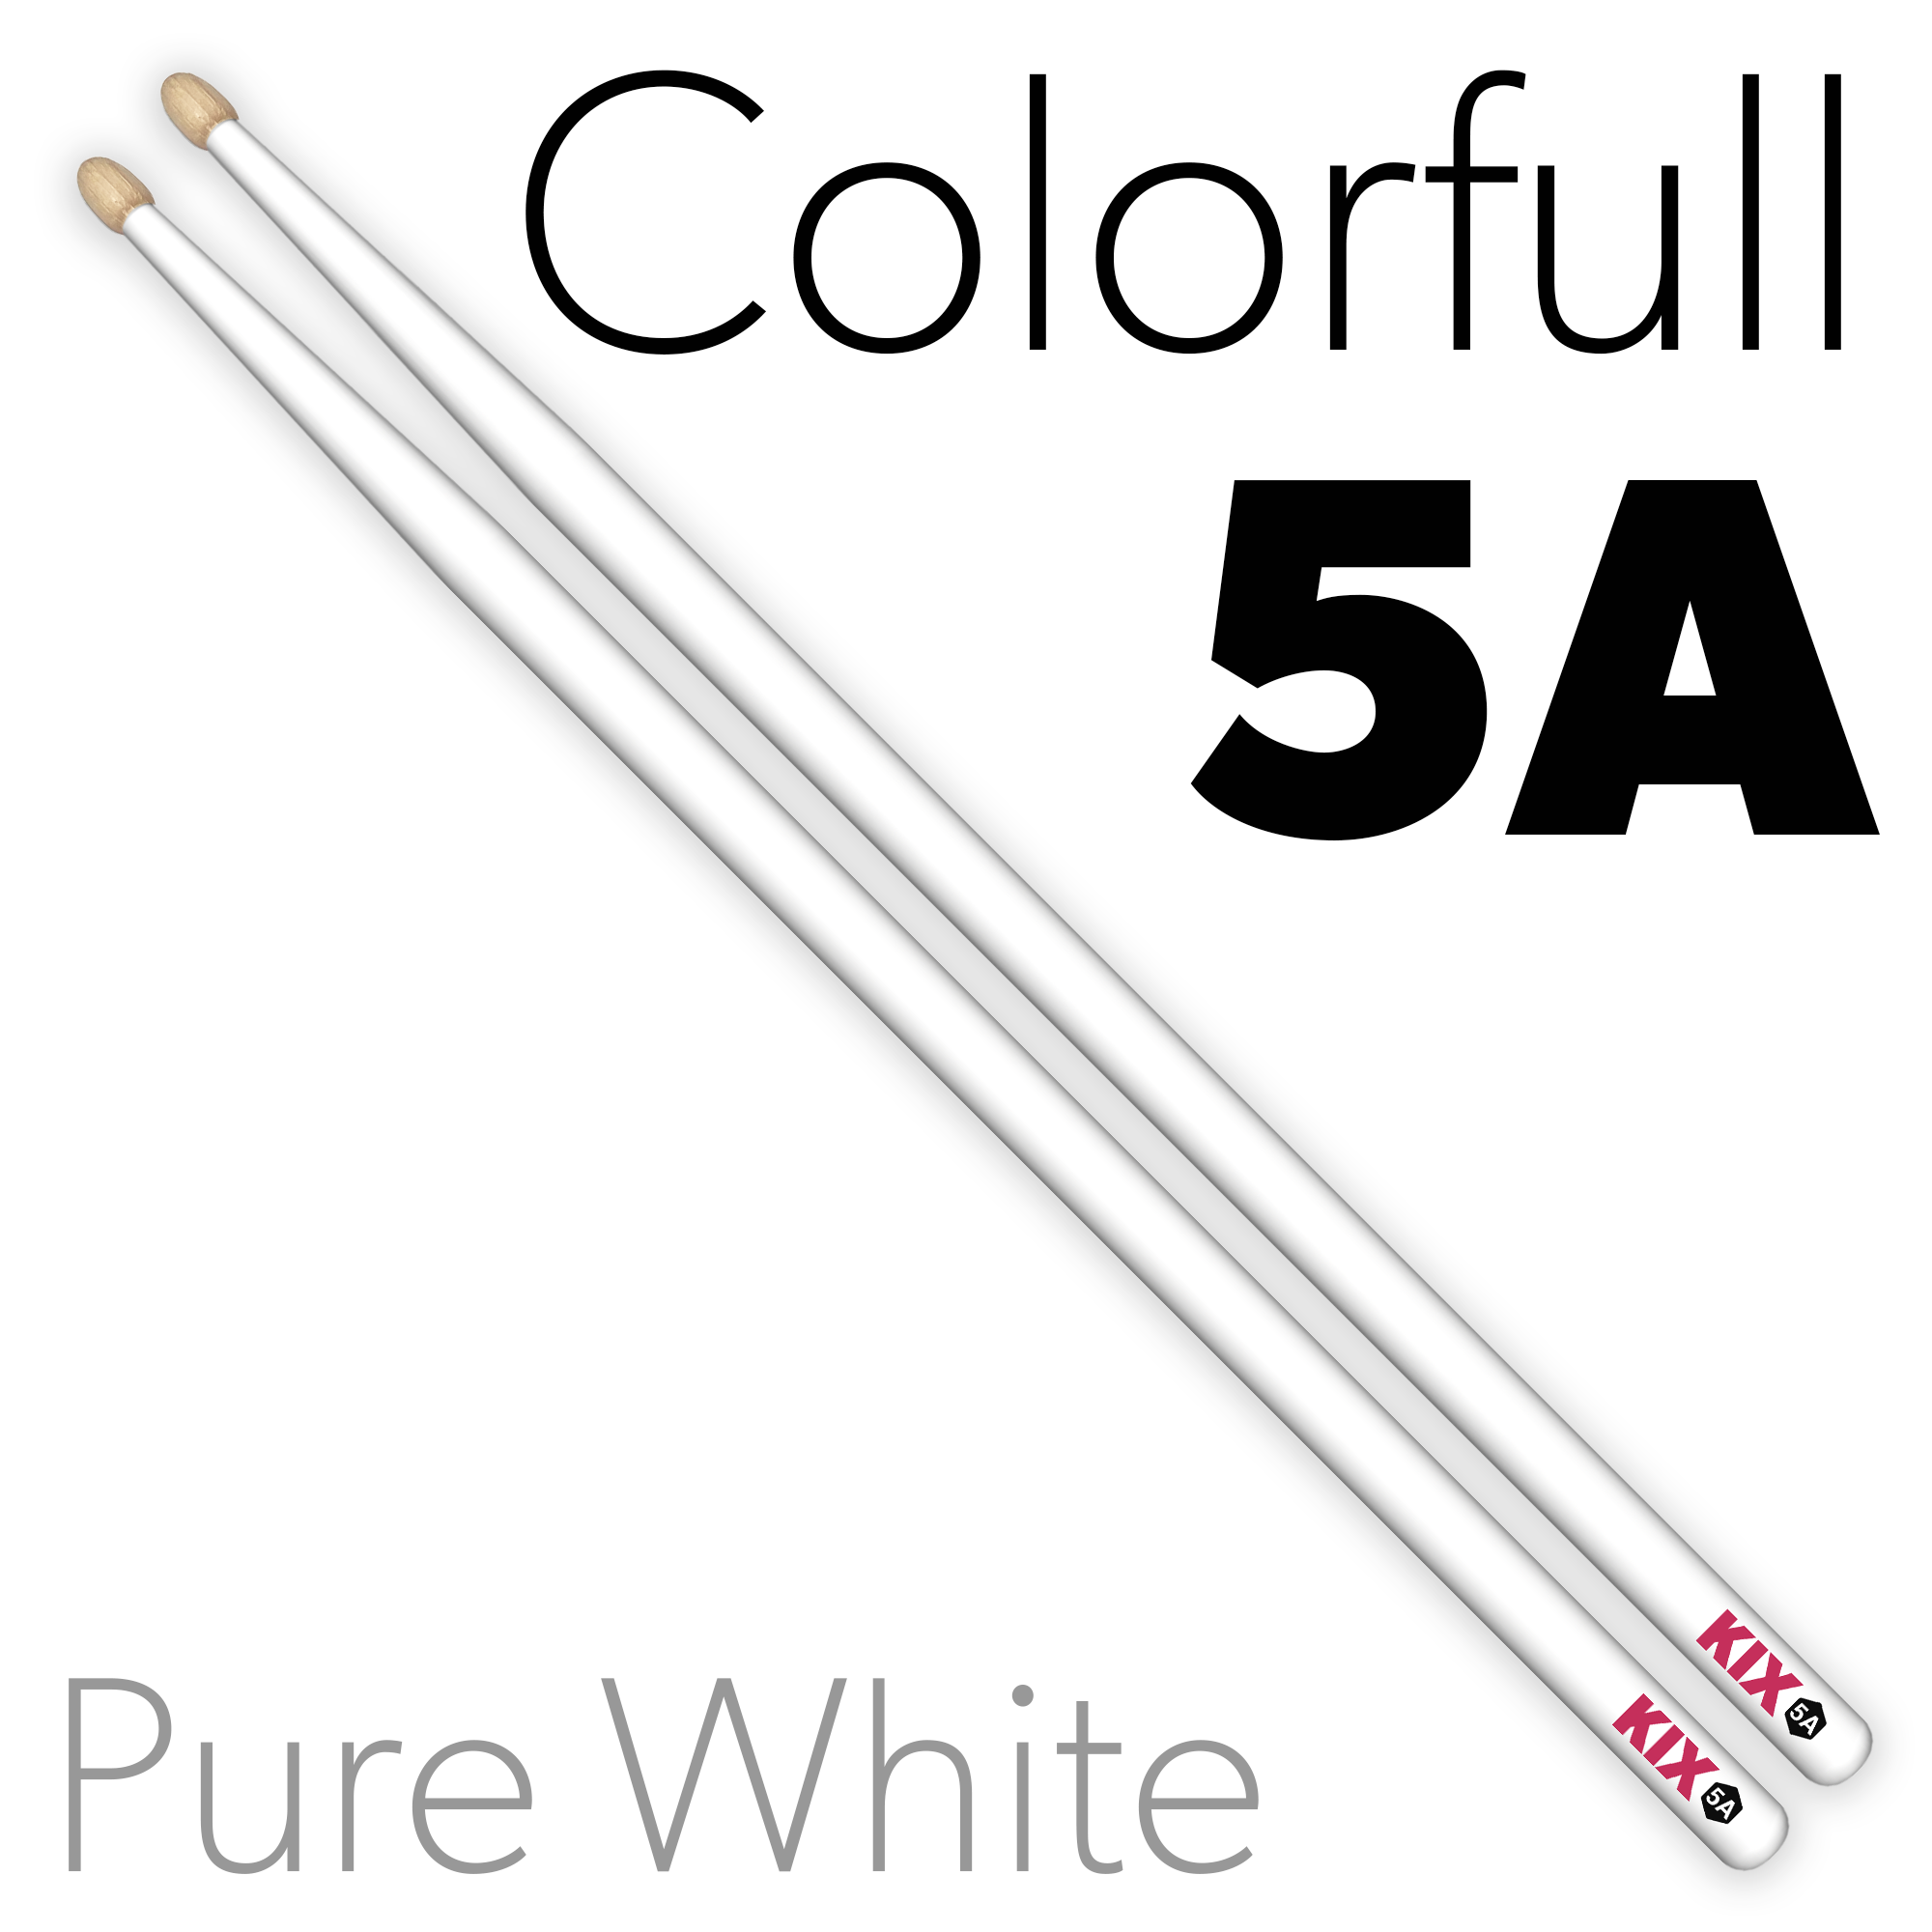 Baguettes Colorfull 5A – Pure White KIX